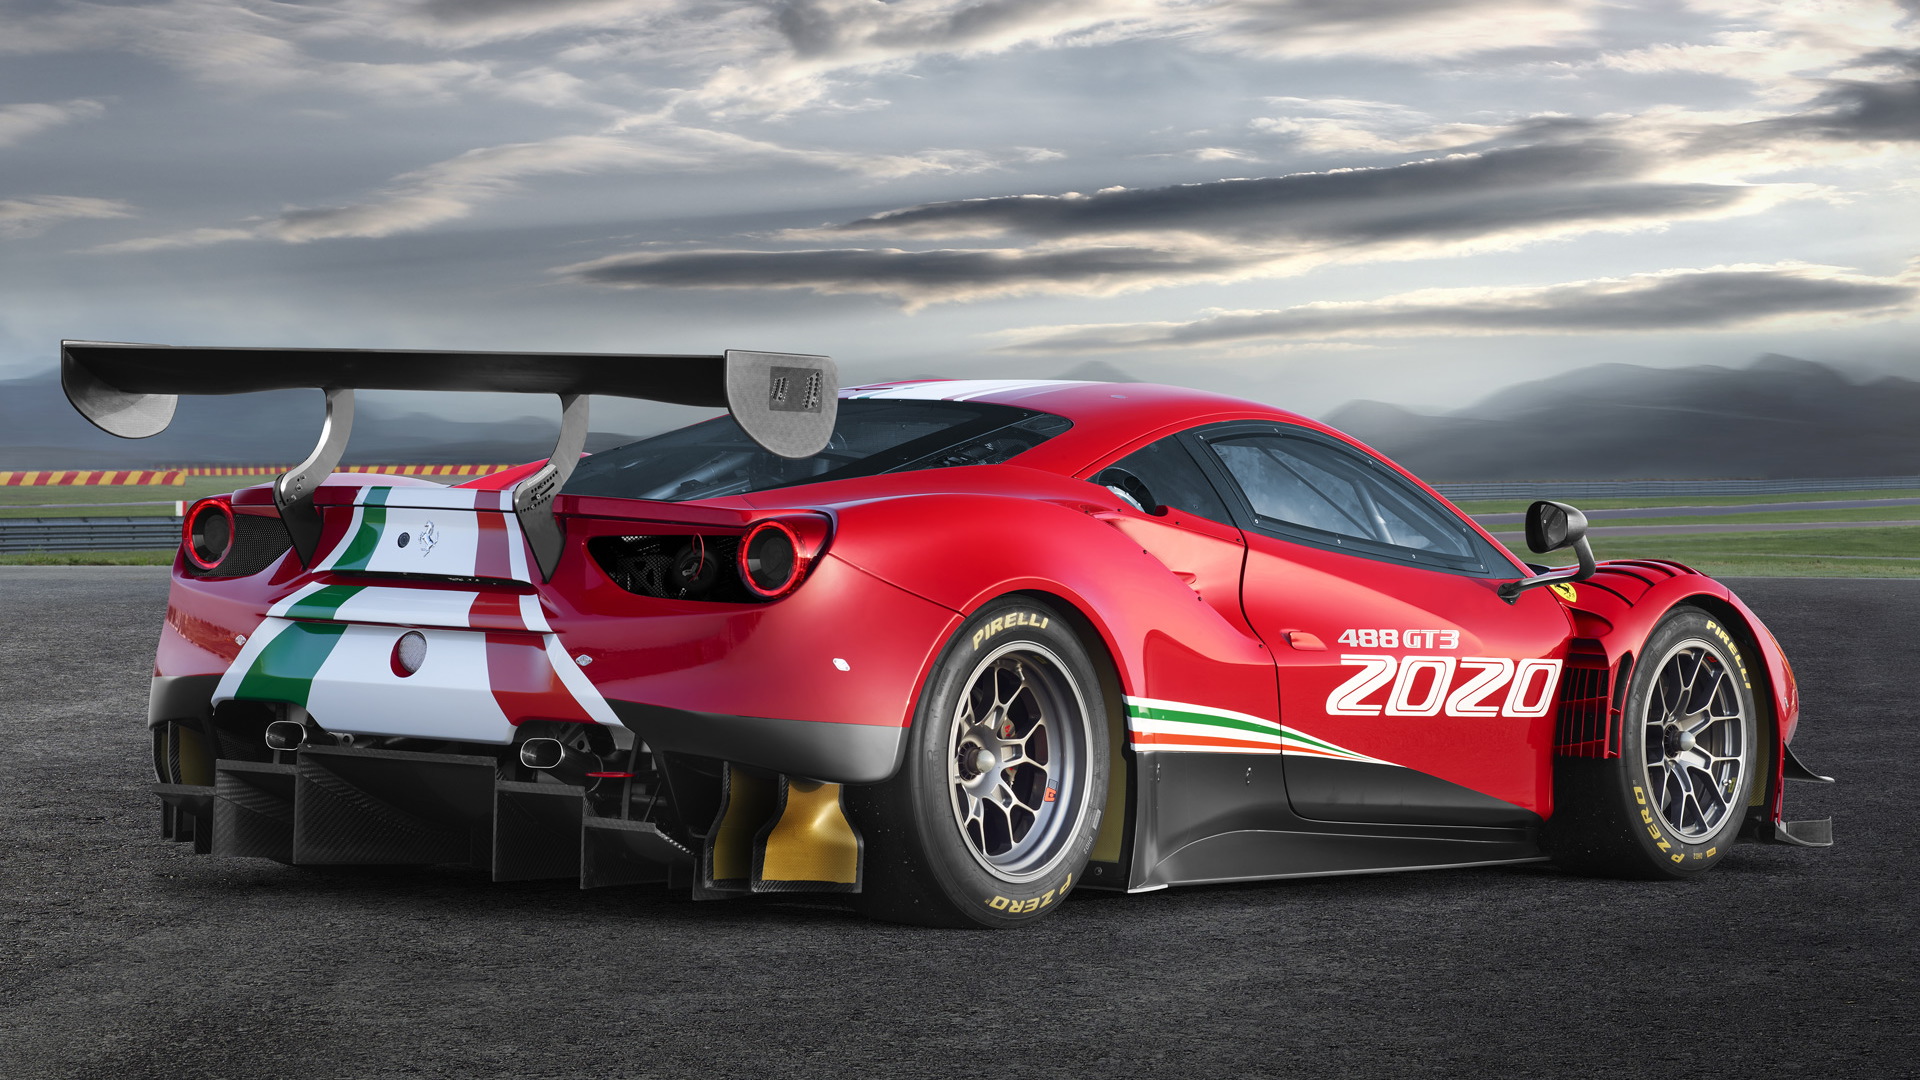 2020 Ferrari 488 GT3 Evo race car